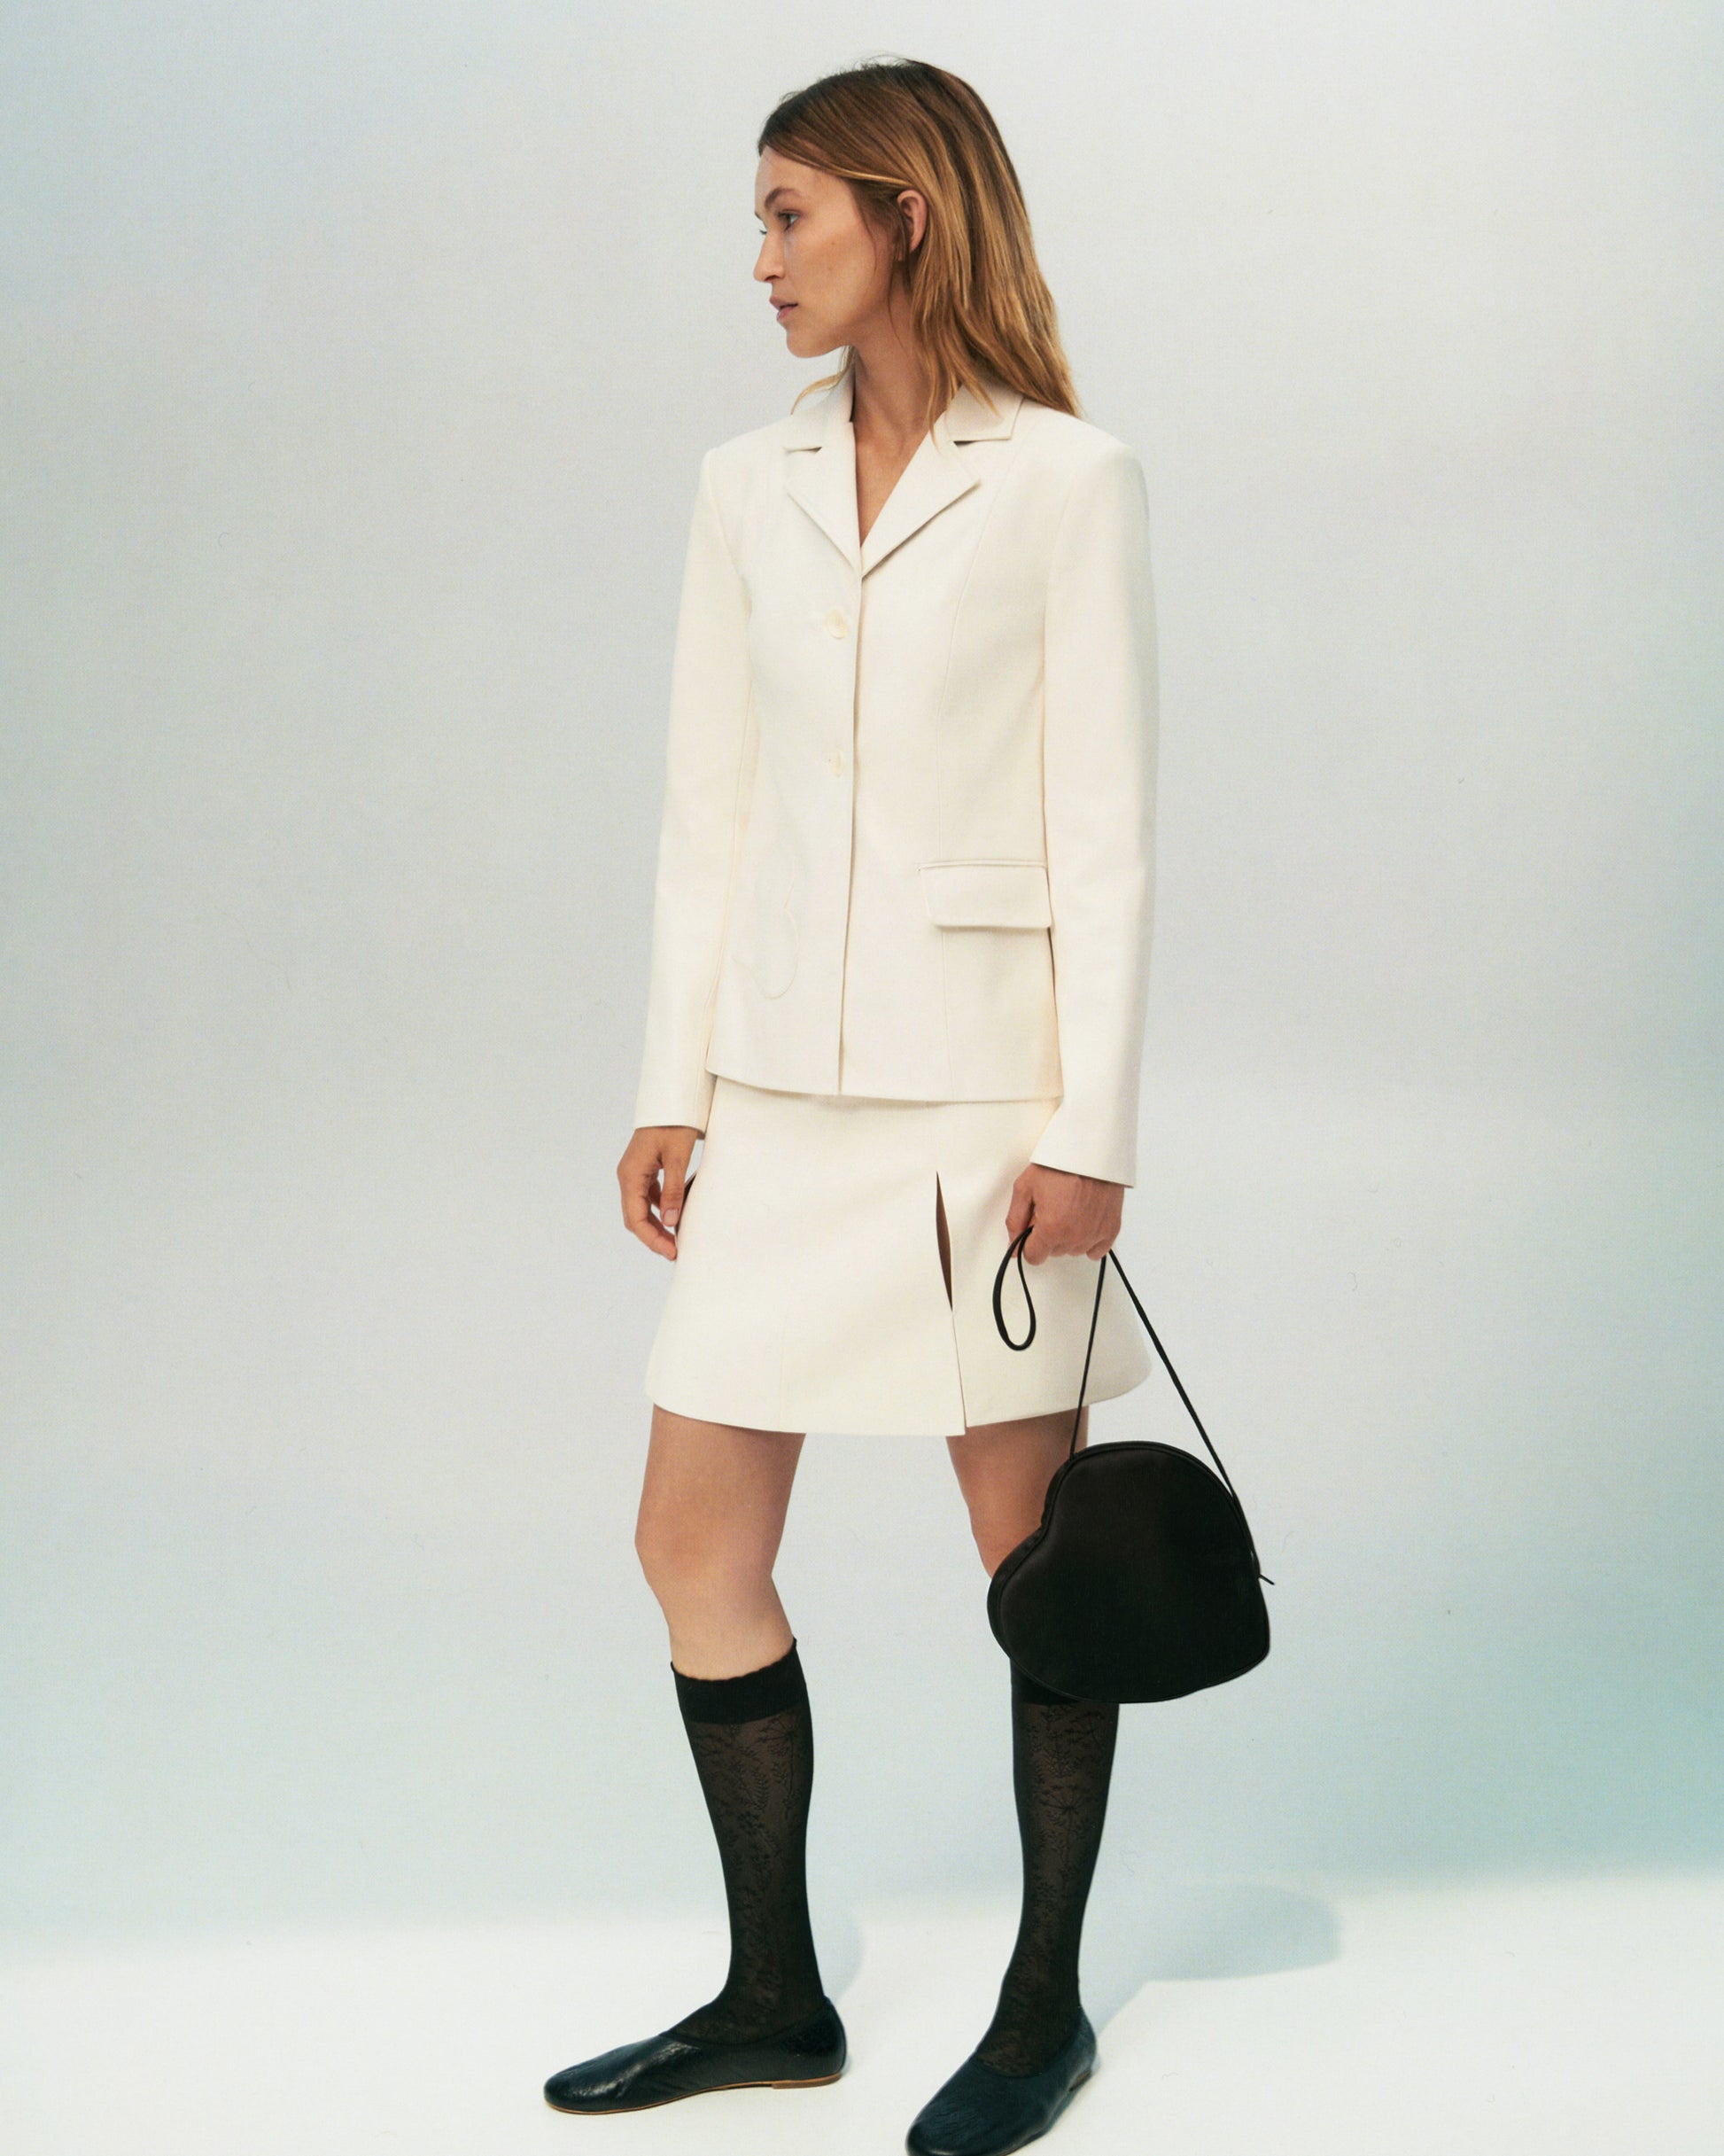 Leather Cut-out Panels Skirt in white color from forma brand. Shop online, leather white skirt. Спідниця з розрізами, біла шкіряна спідниця тренд 2023, бренд ФОРМА